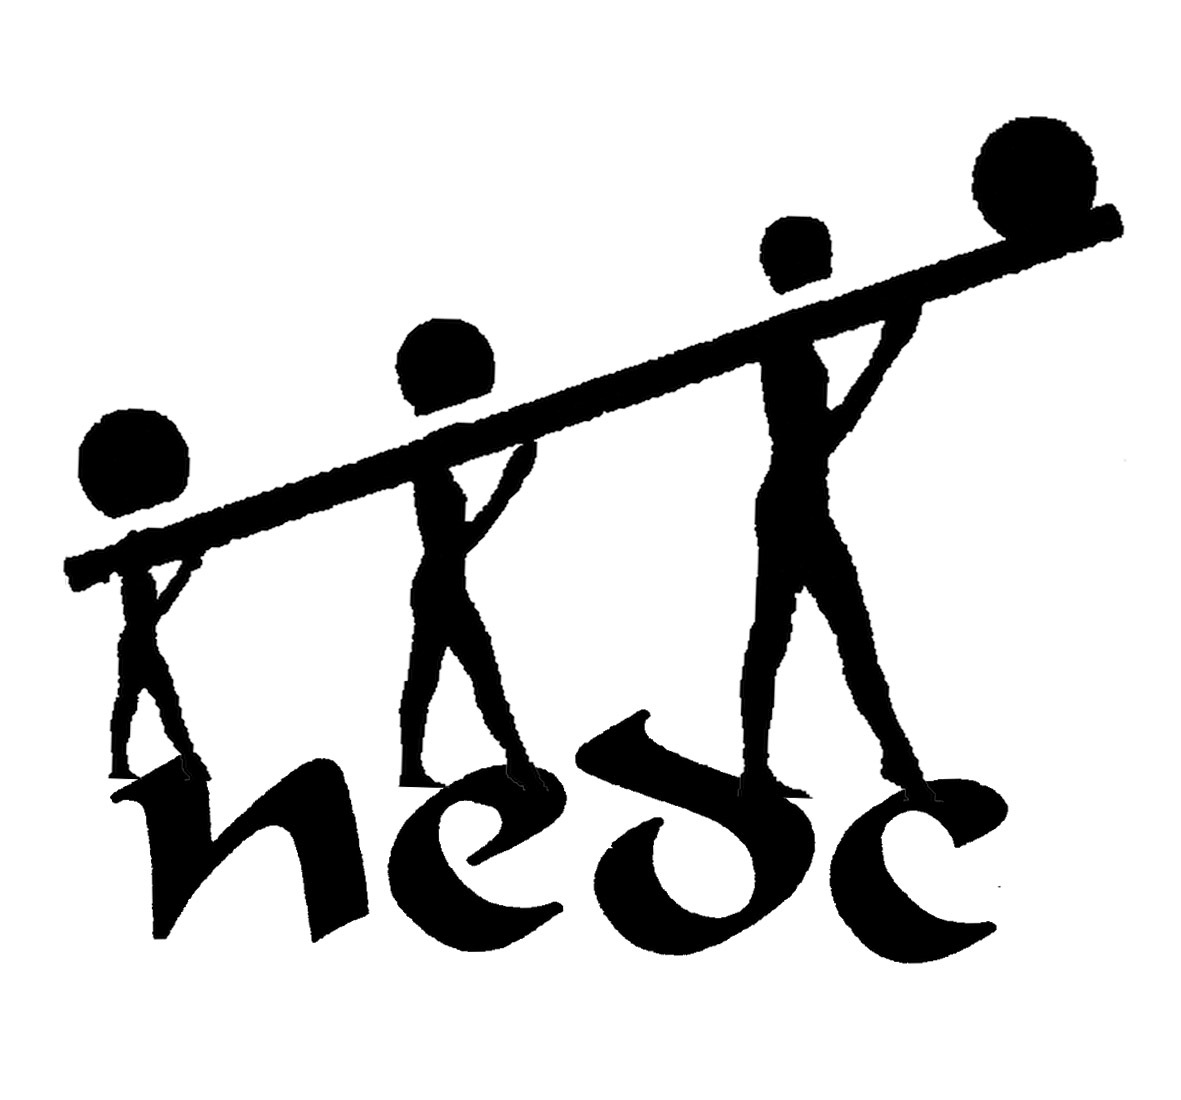 North East Development Consortium (NEDC)